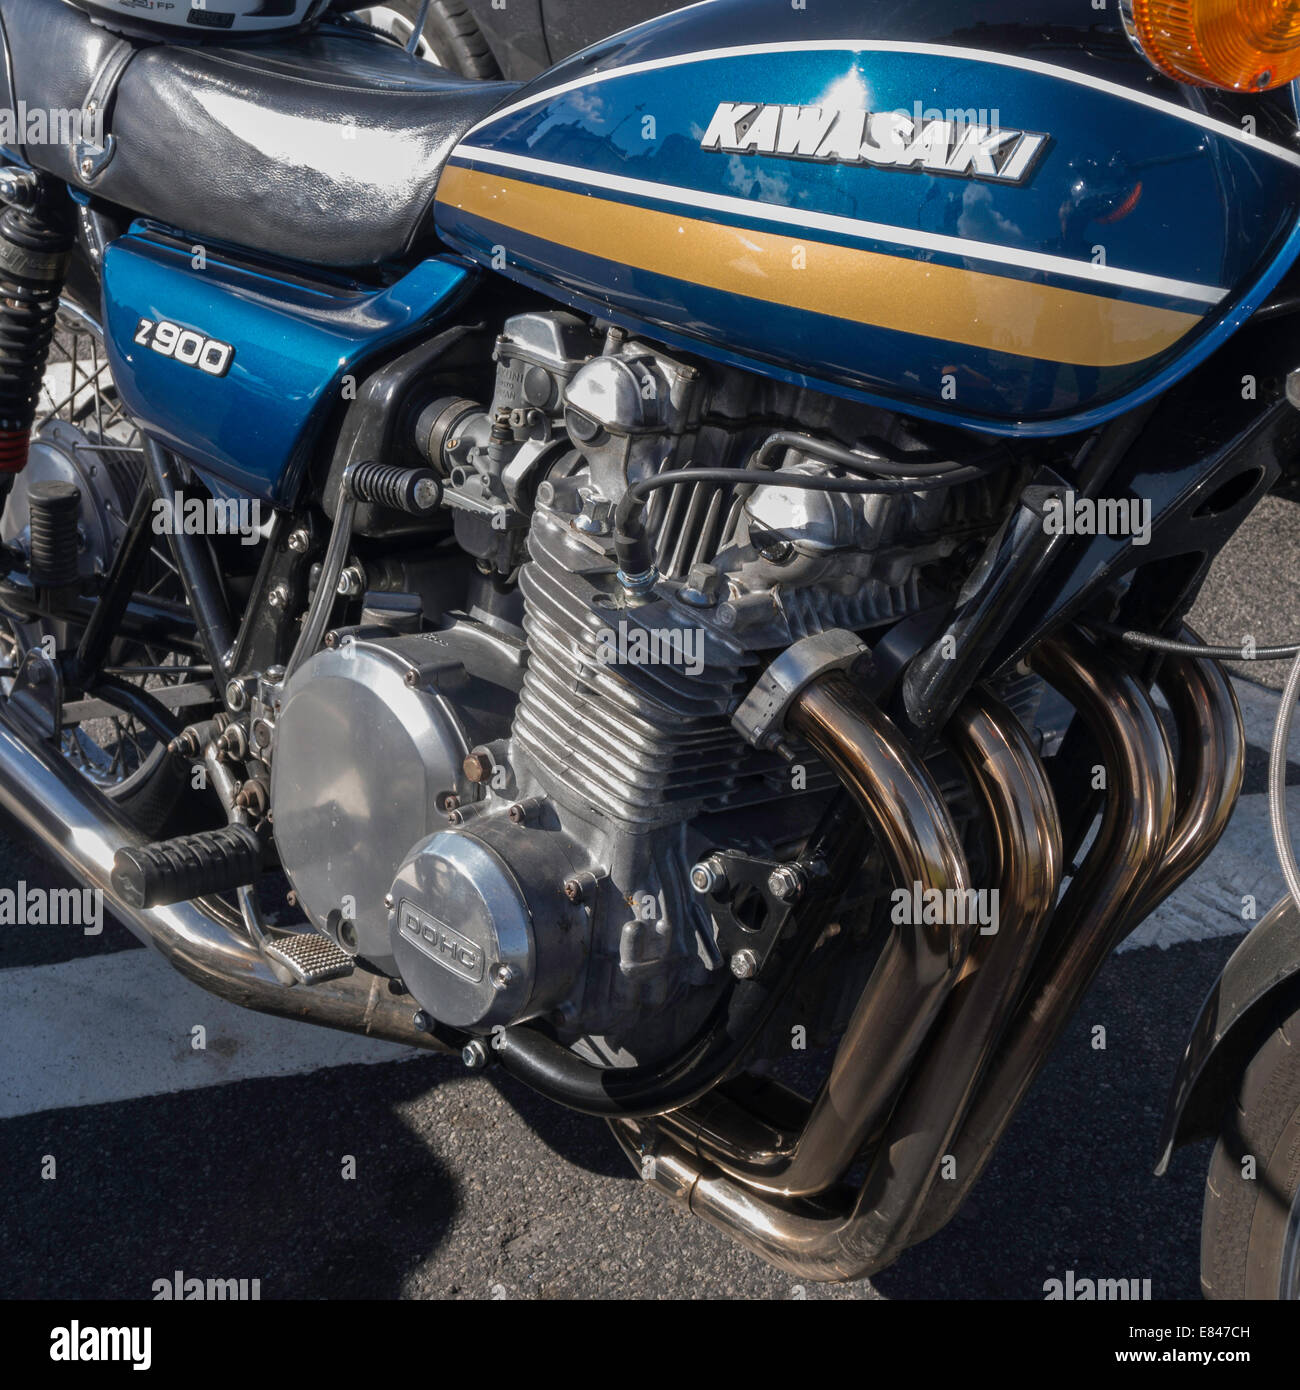 Kawasaki Z900 High Resolution Photography and Images -